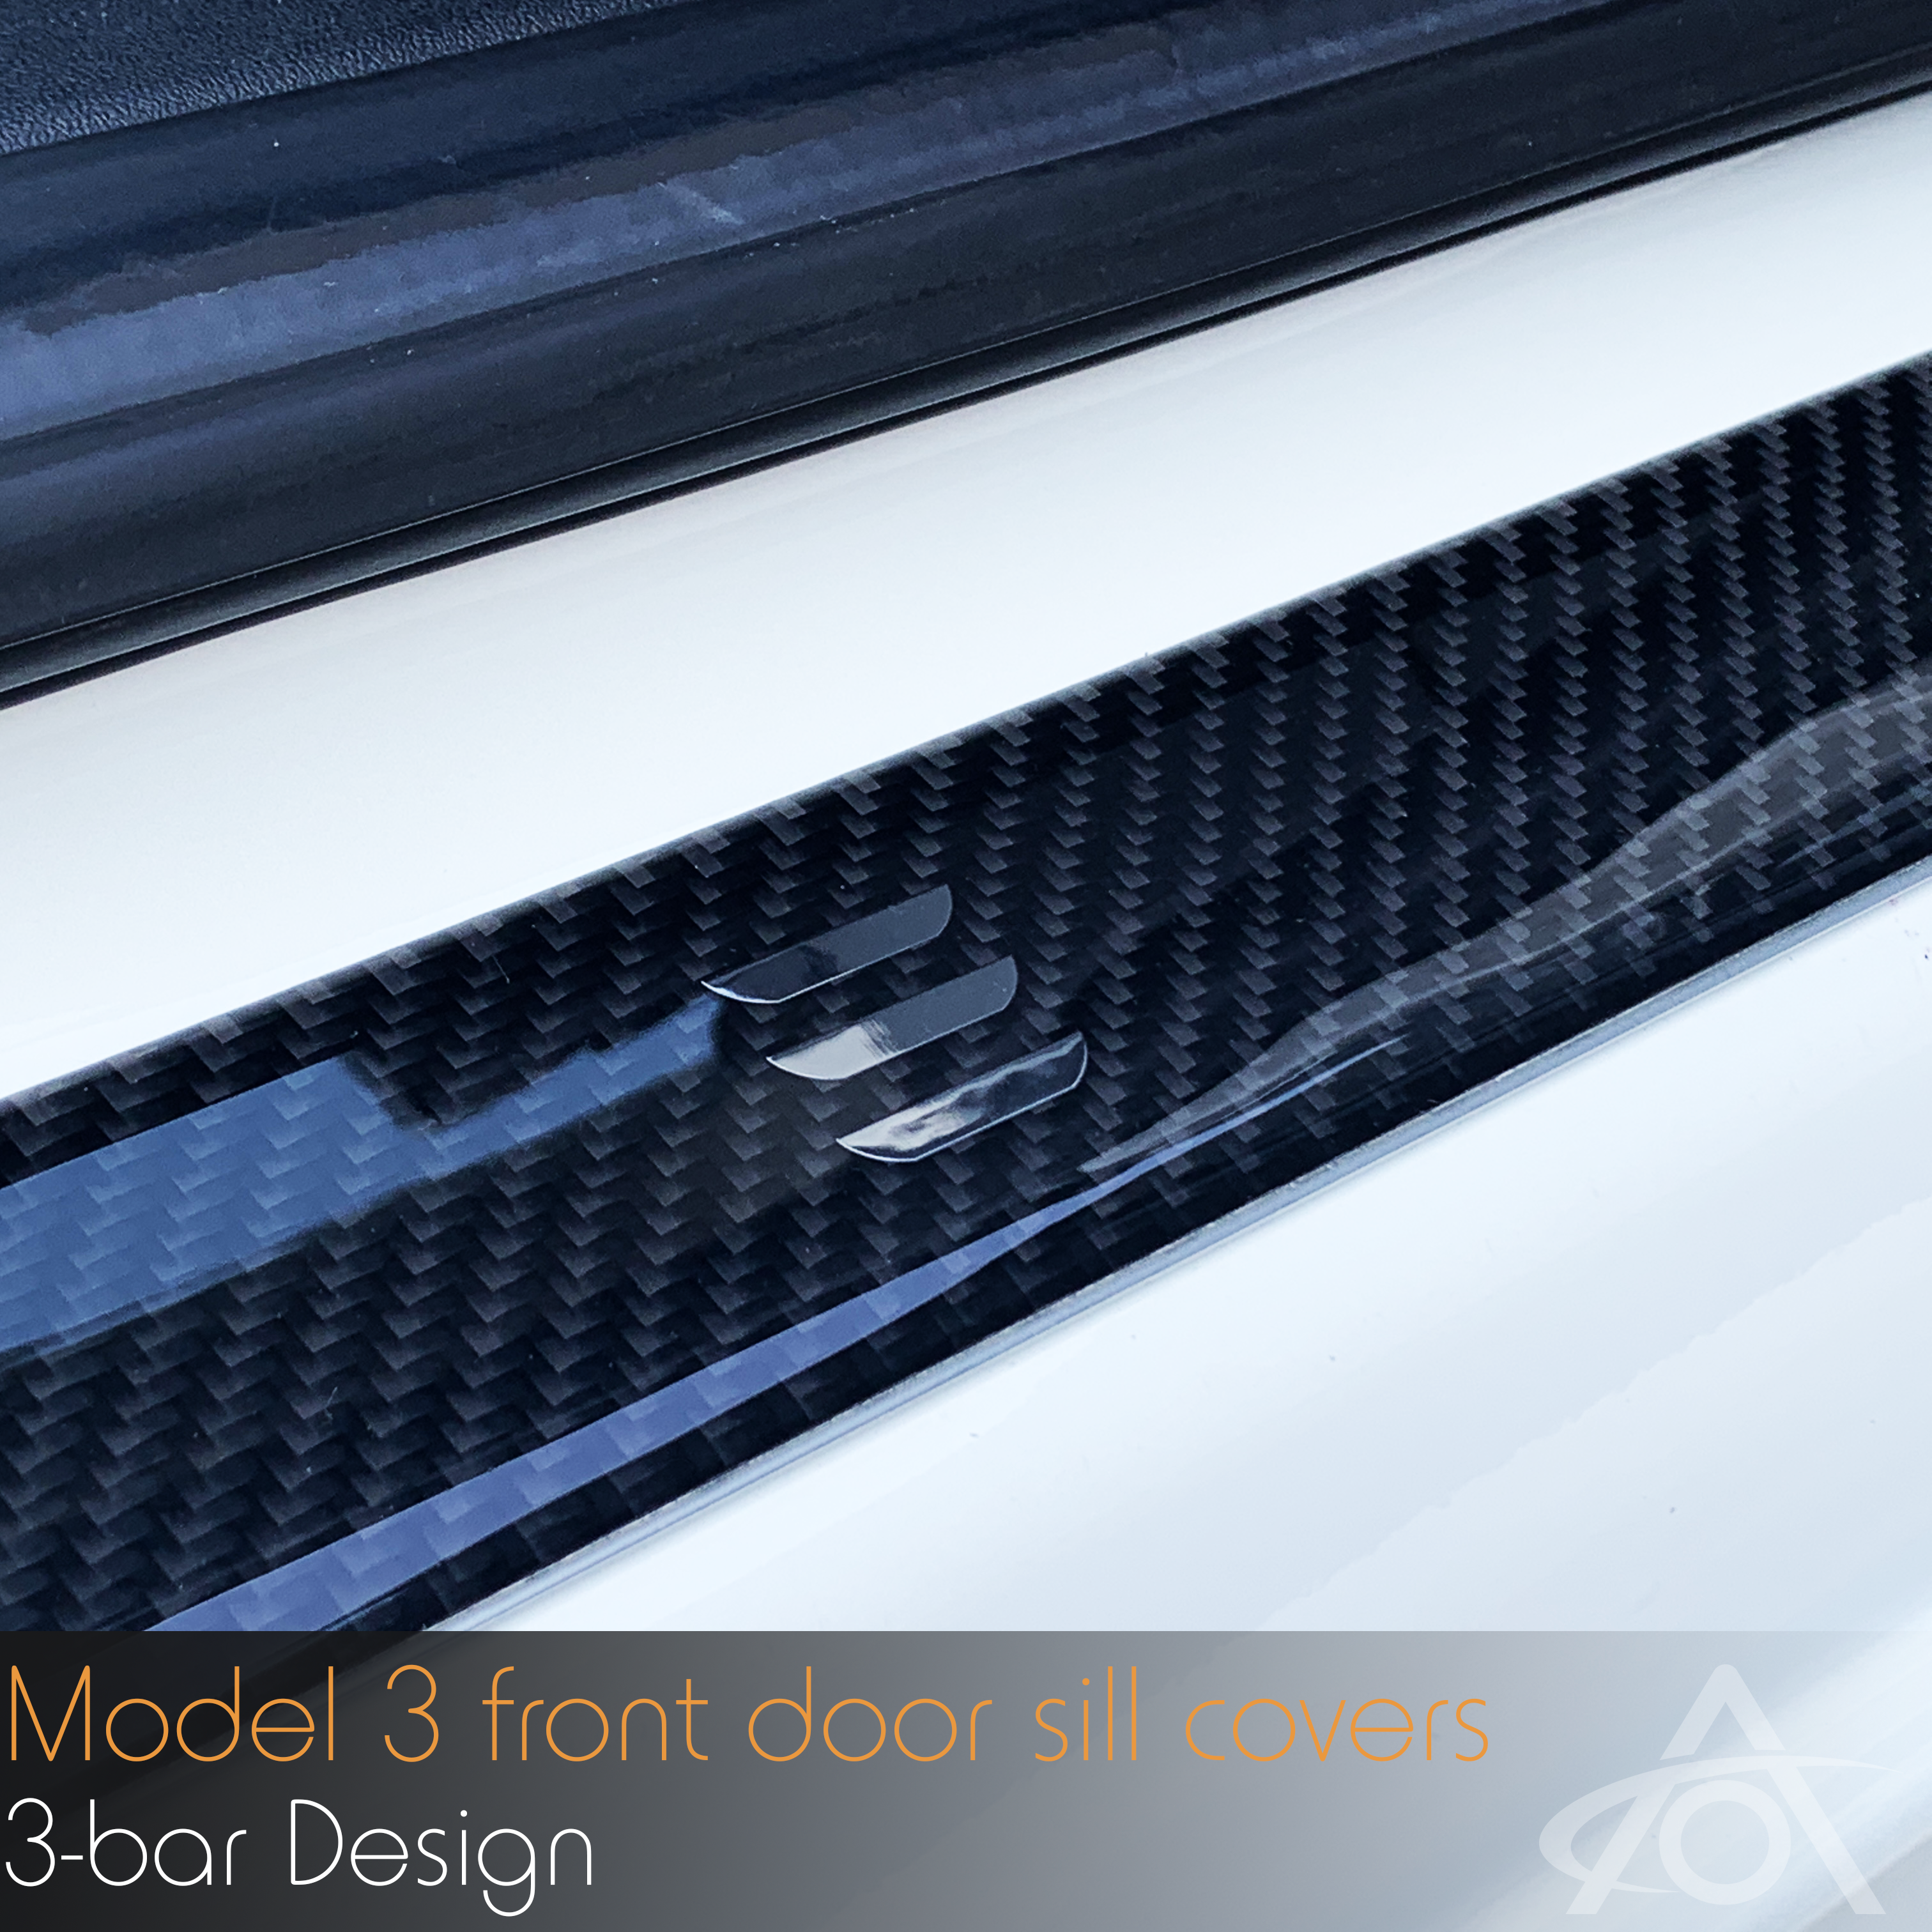 EVBASE Tesla Door Sill Protector Model 3 Y Carbon Fiber Texture Door Sill  Scuff Plate Front Rear Guard (Set of 4)